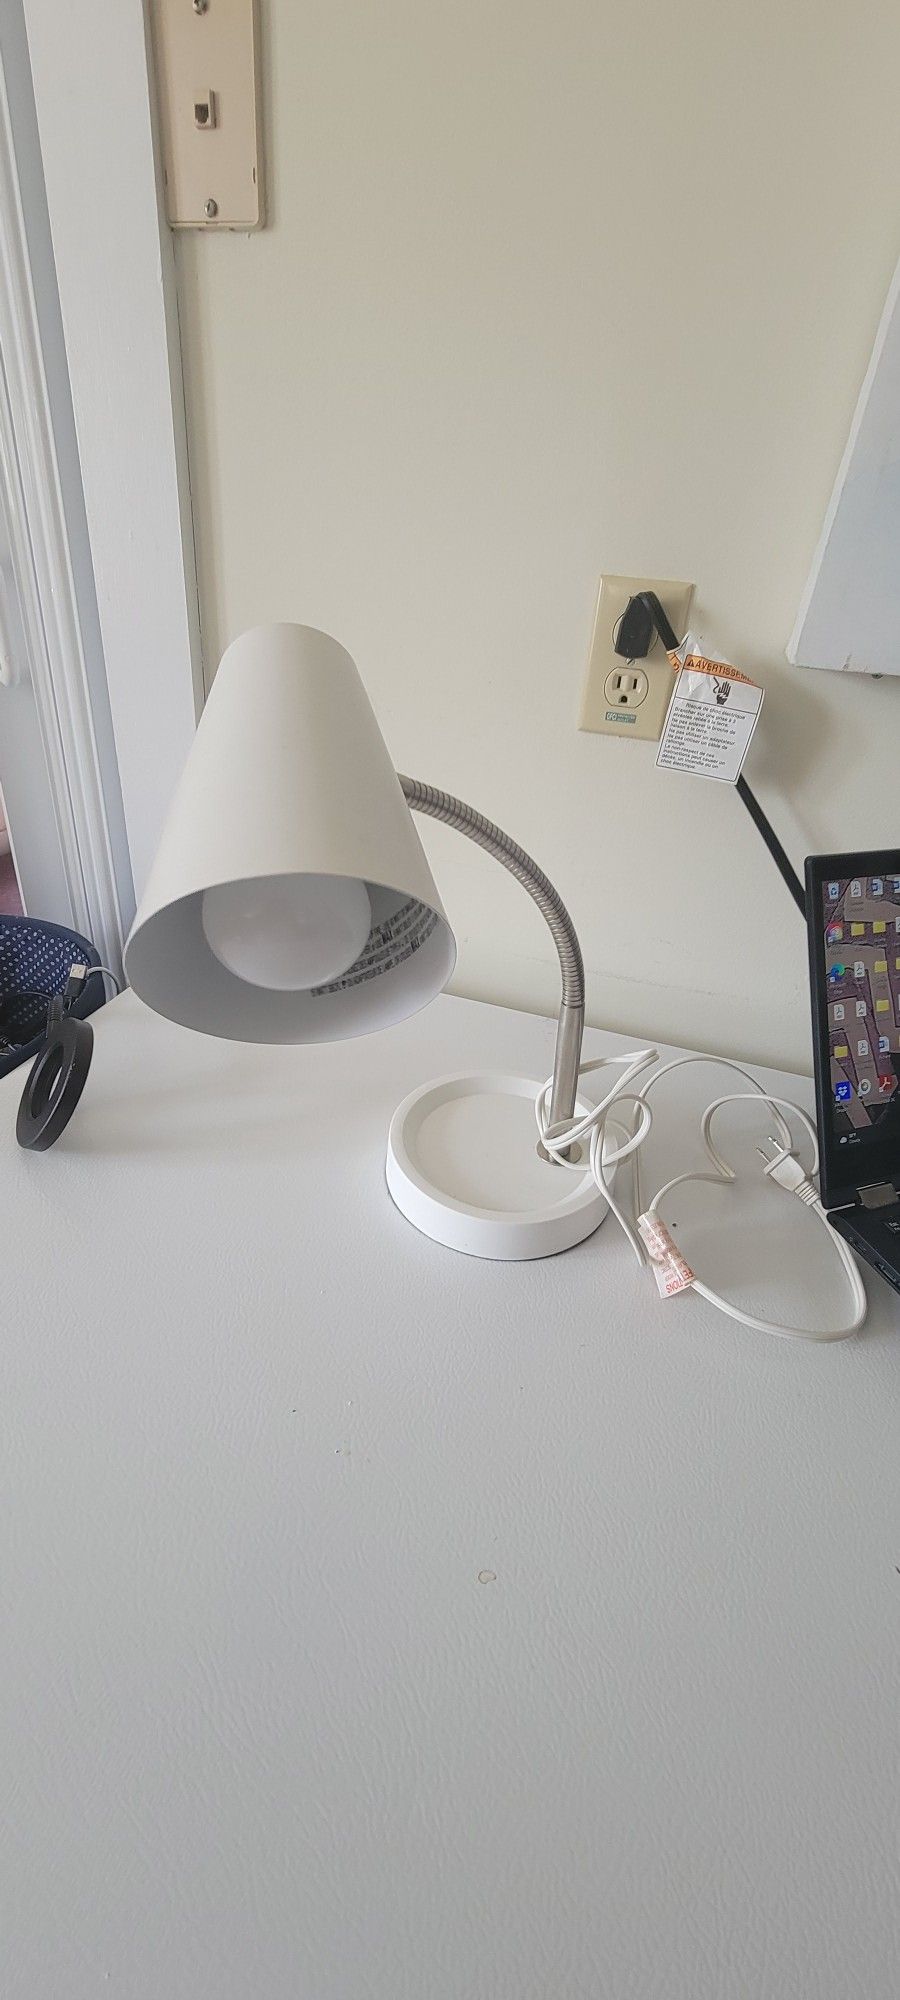 Intertek Adjustable Desk Lamp 